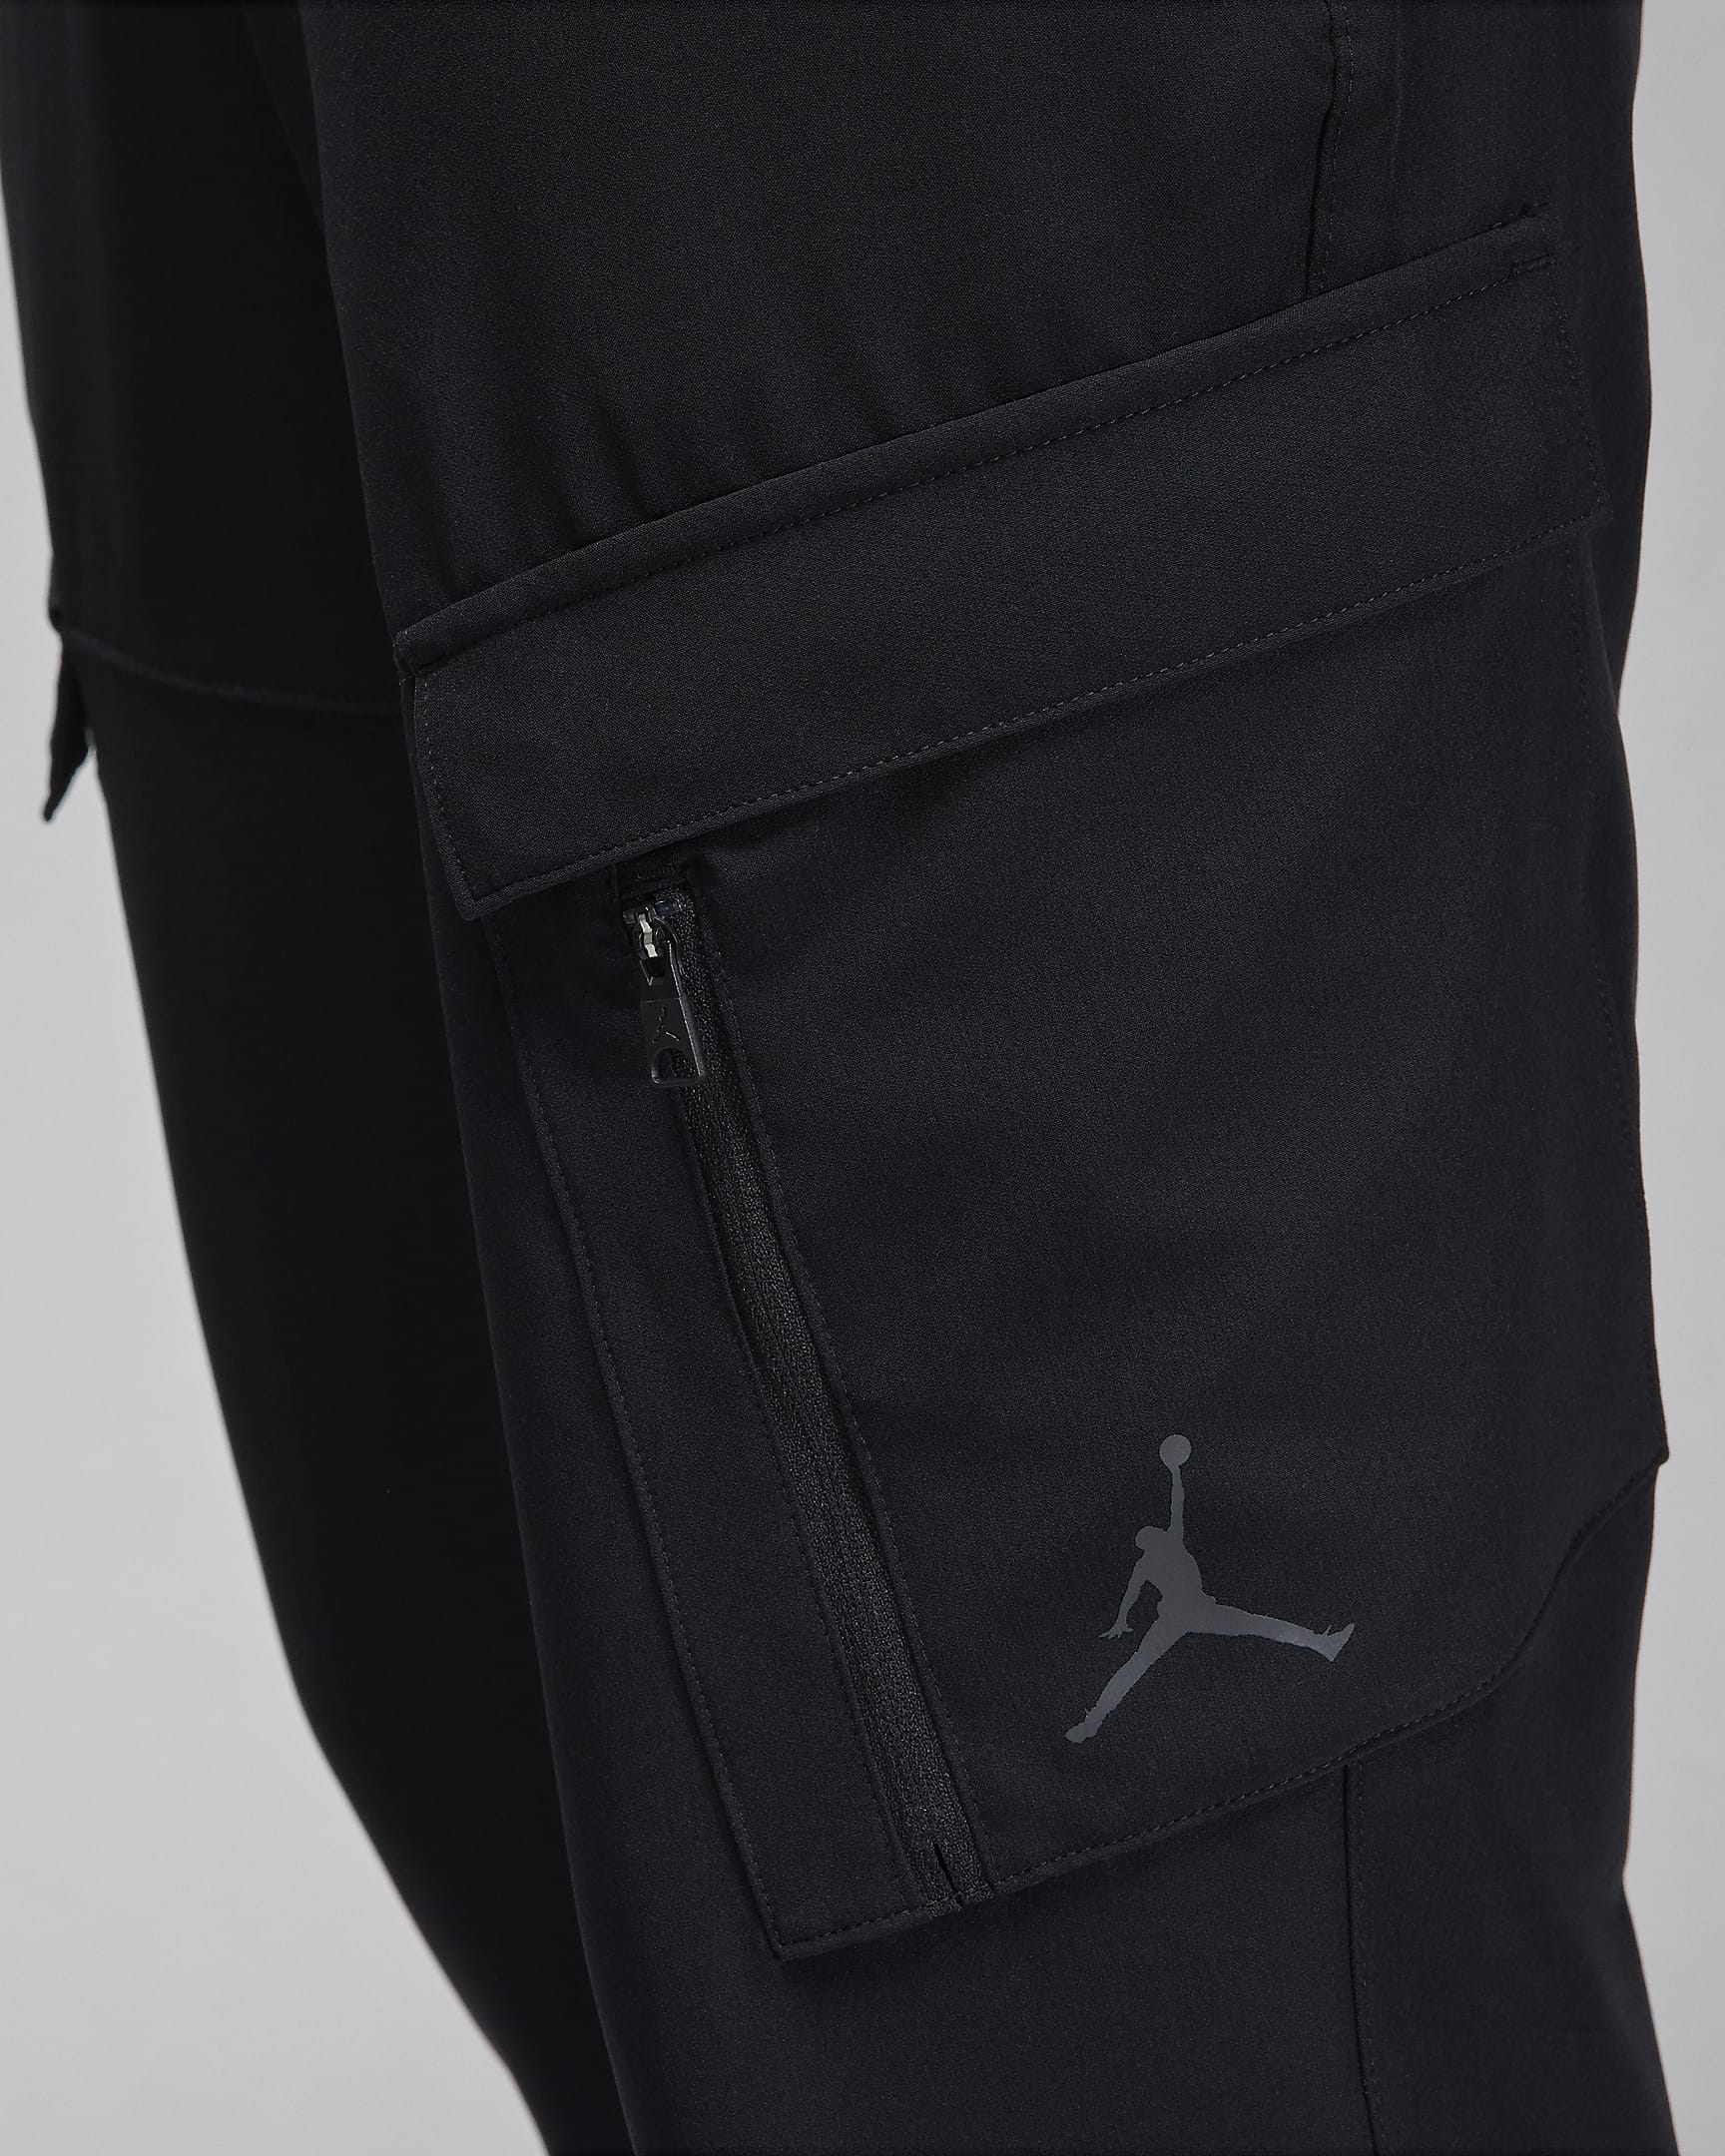 Jordan Golf Men's Trousers - Black/Anthracite